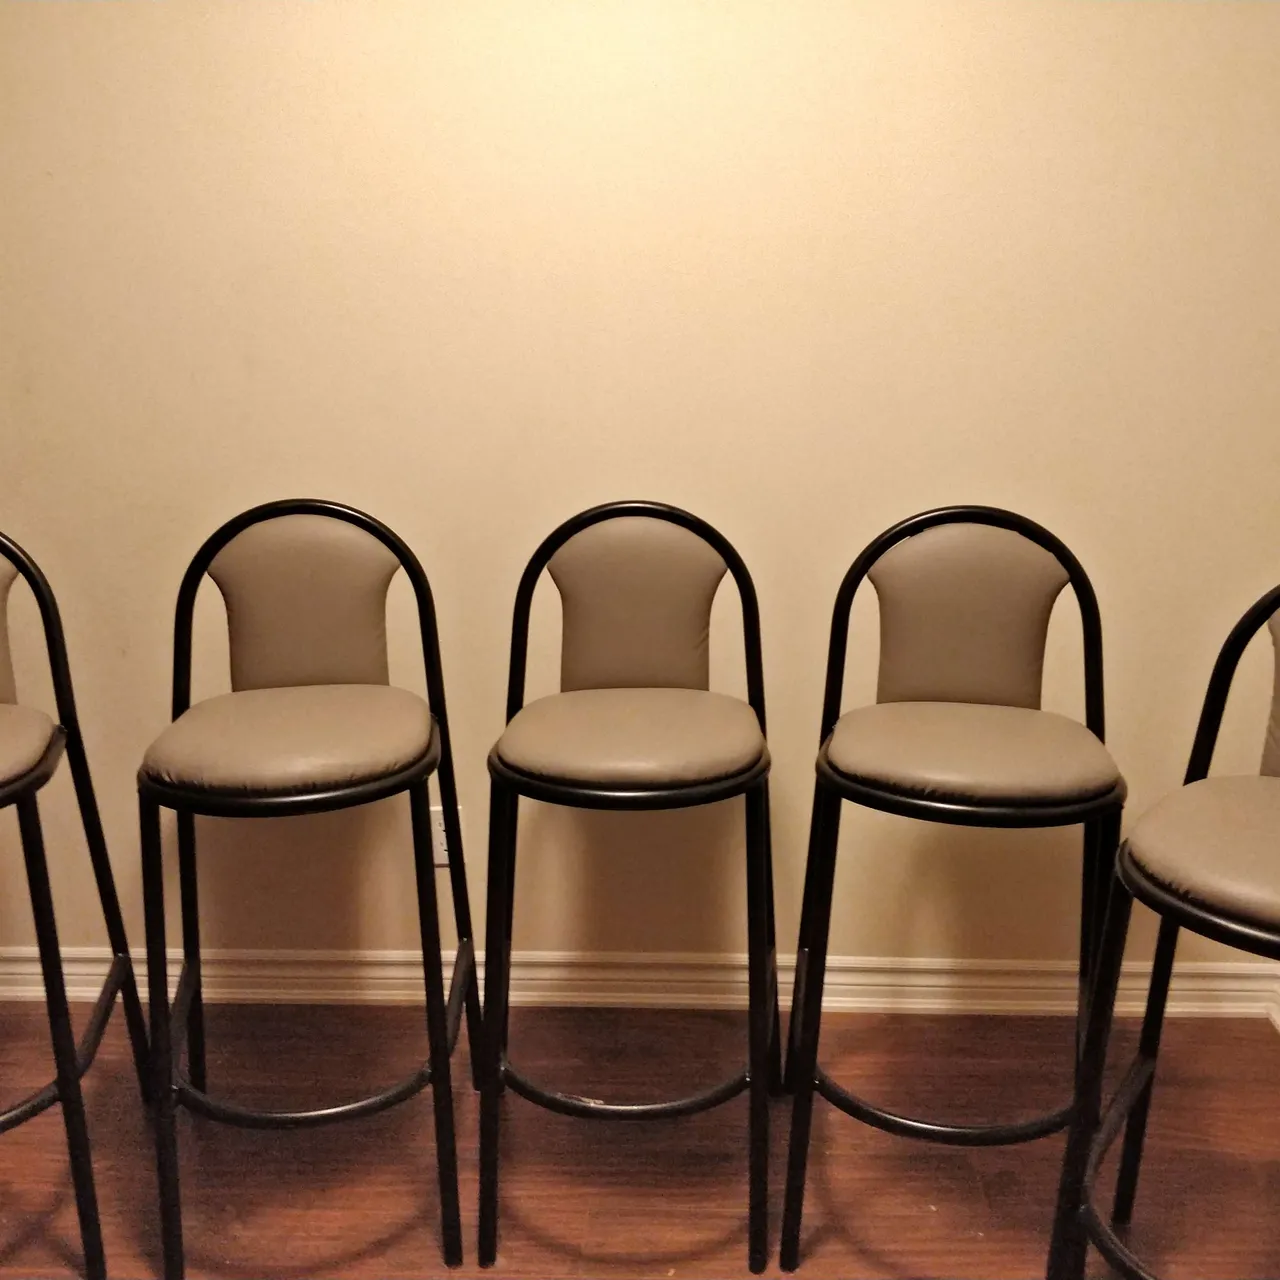 5 refurbished bar stools photo 1